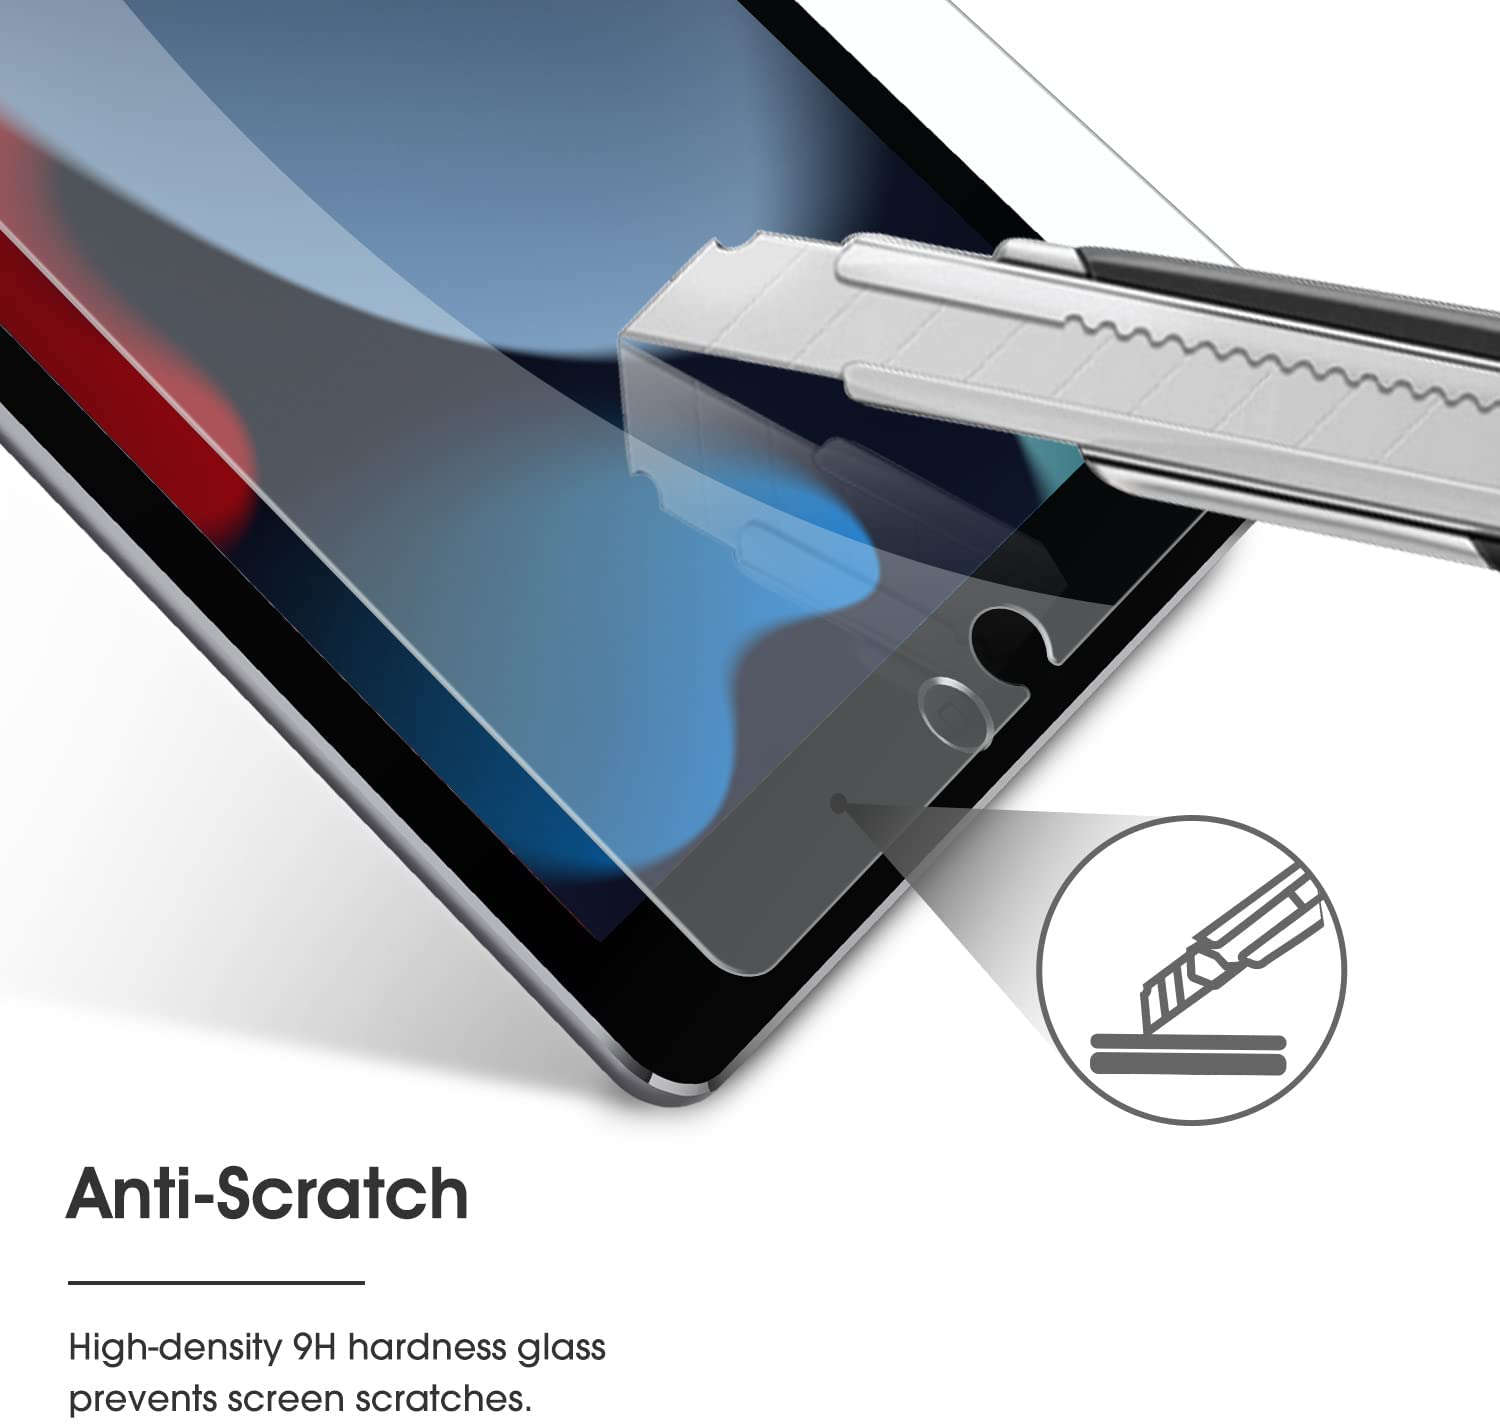 iPad Pro 10.5 - Tempered Glass